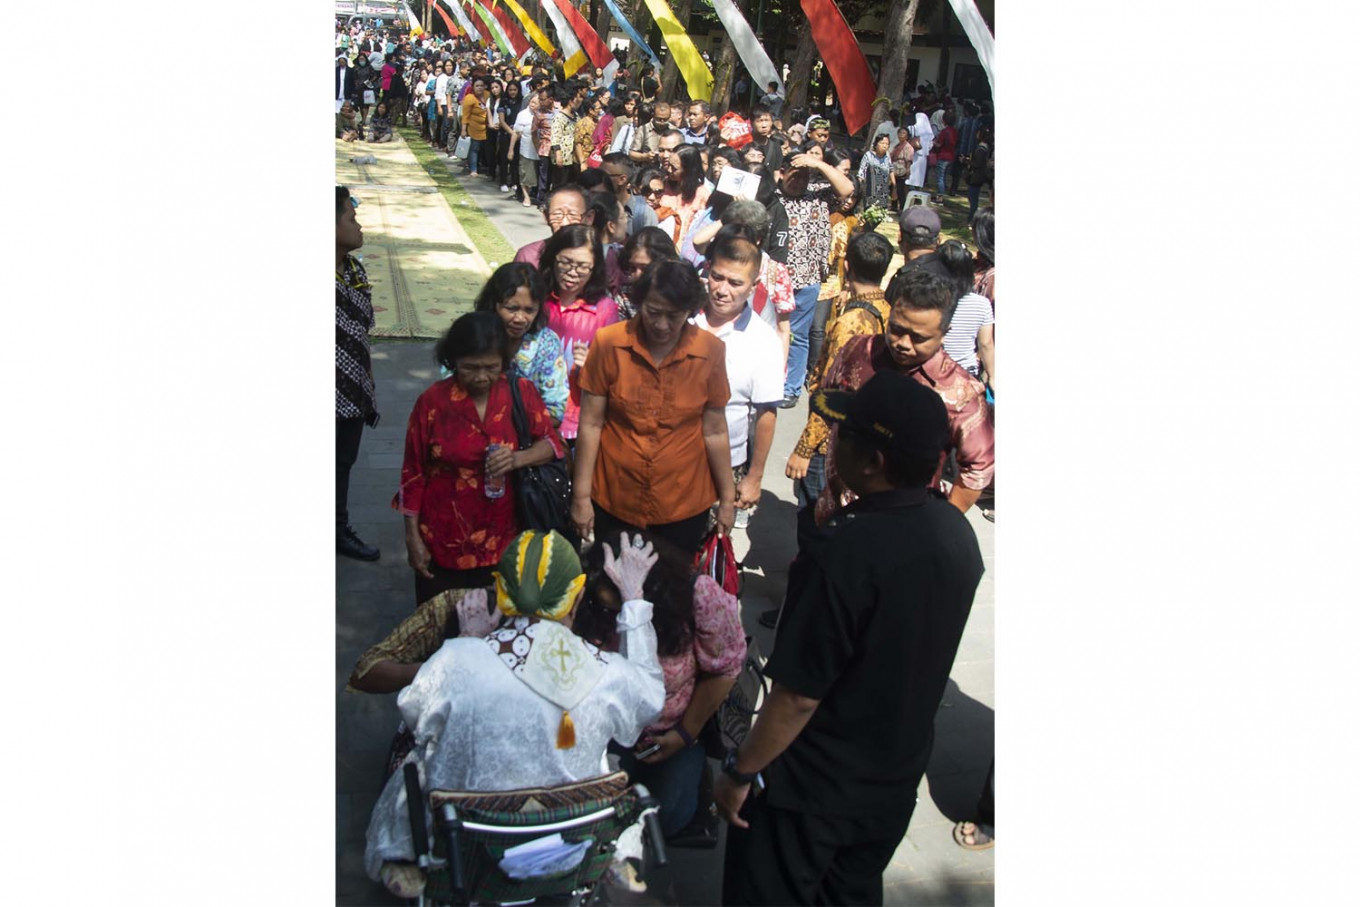 Proses pemberkatan kepada yang hadir di Misa Kudus tersebut | Foto: Tarko Sudiarno / Jakarta Post